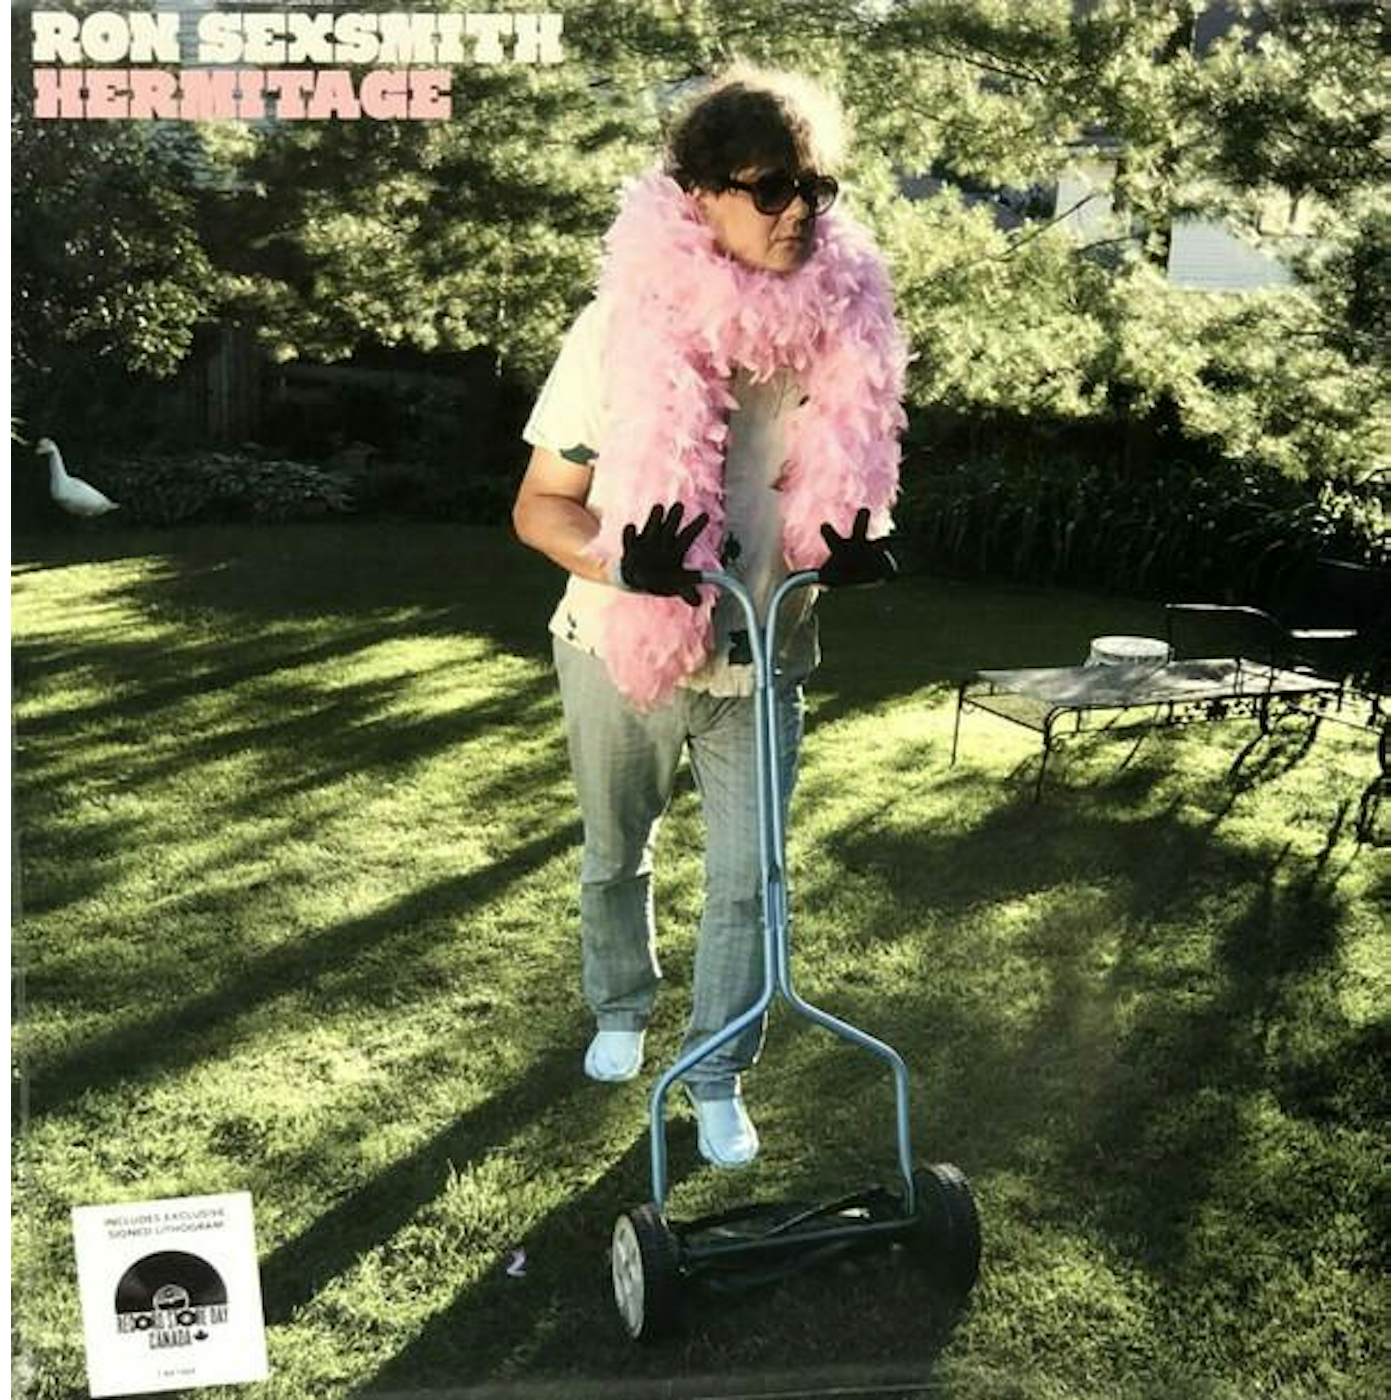 Ron Sexsmith Hermitage Vinyl Record